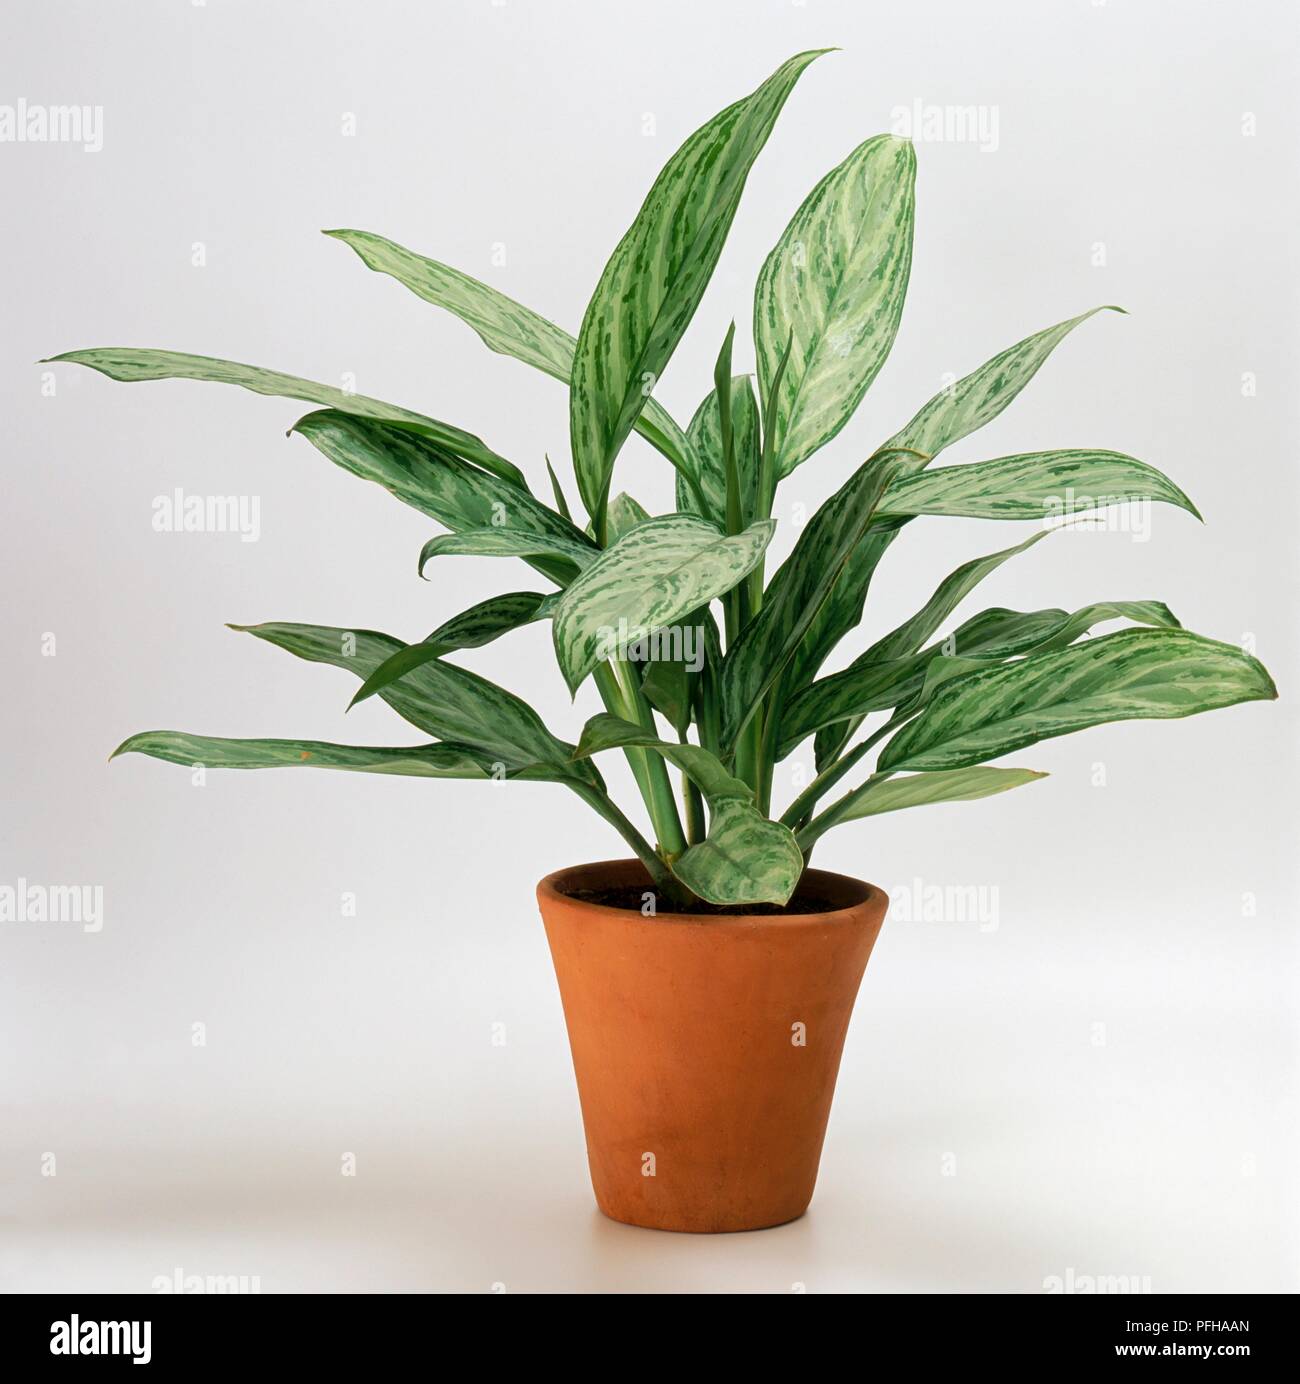 Aglaonema 'Lilian' (Chinese evergreen) in terracotta pot Stock Photo